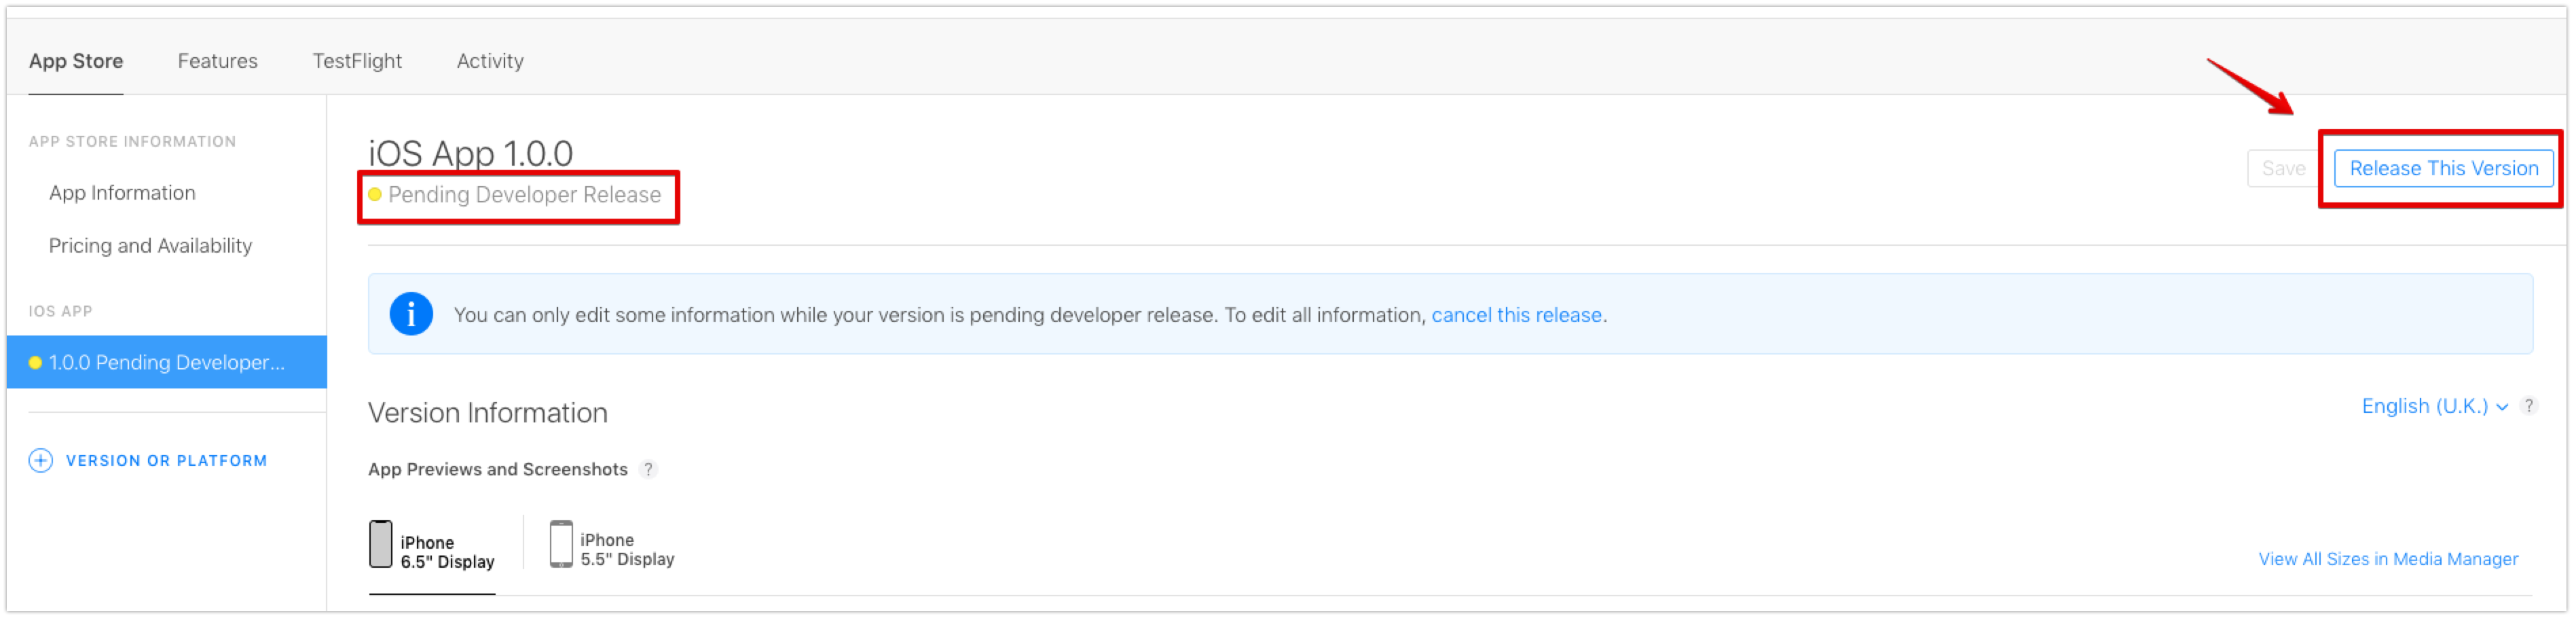 AppStore Pending Developer Release